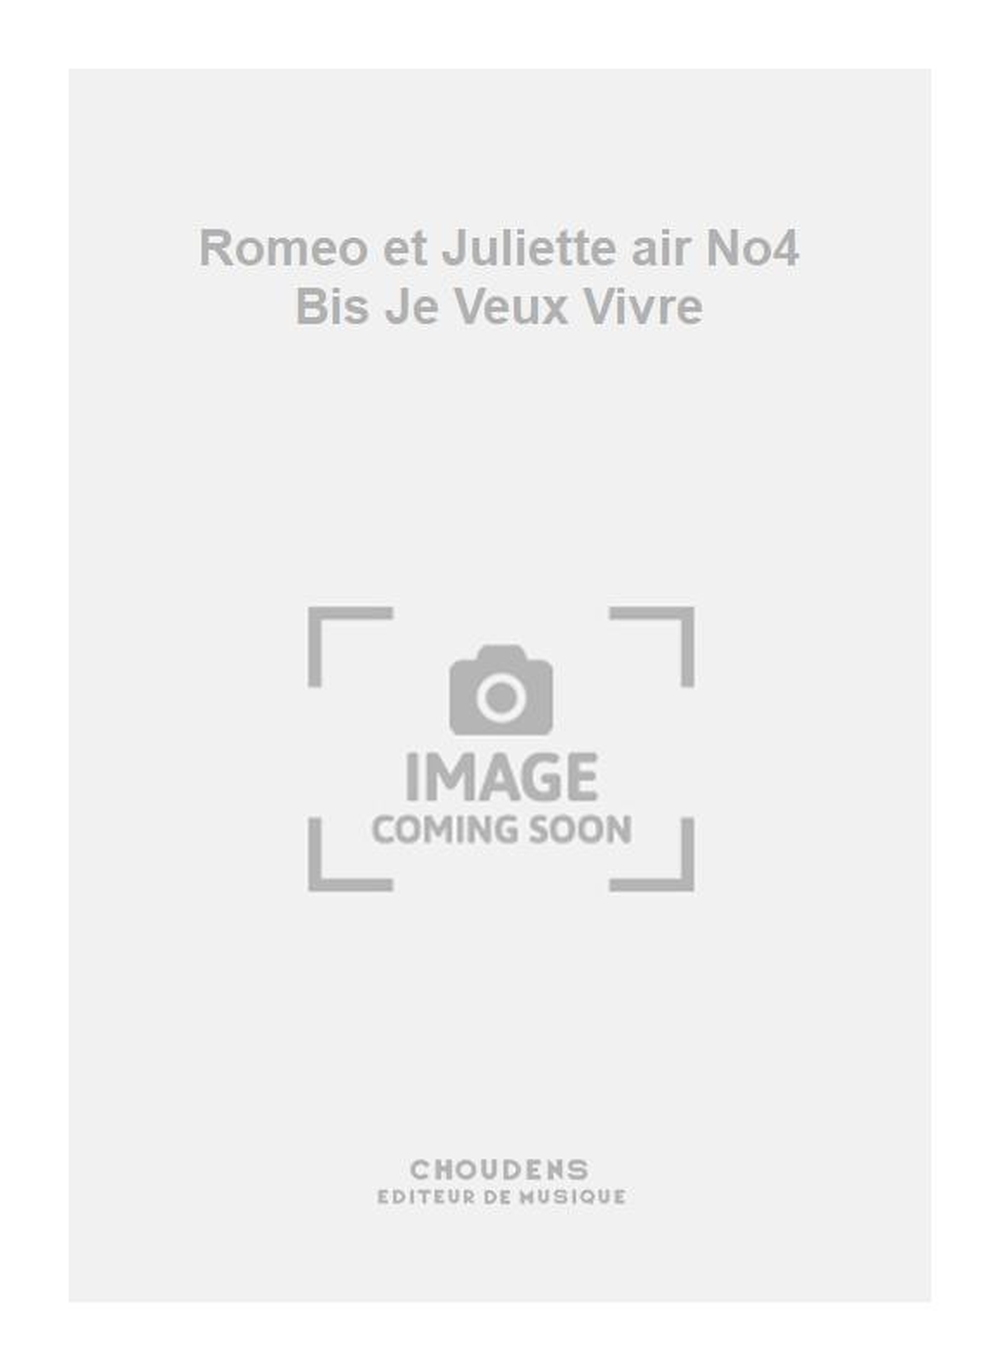 Charles Gounod: Romeo et Juliette air No4 Bis Je Veux Vivre